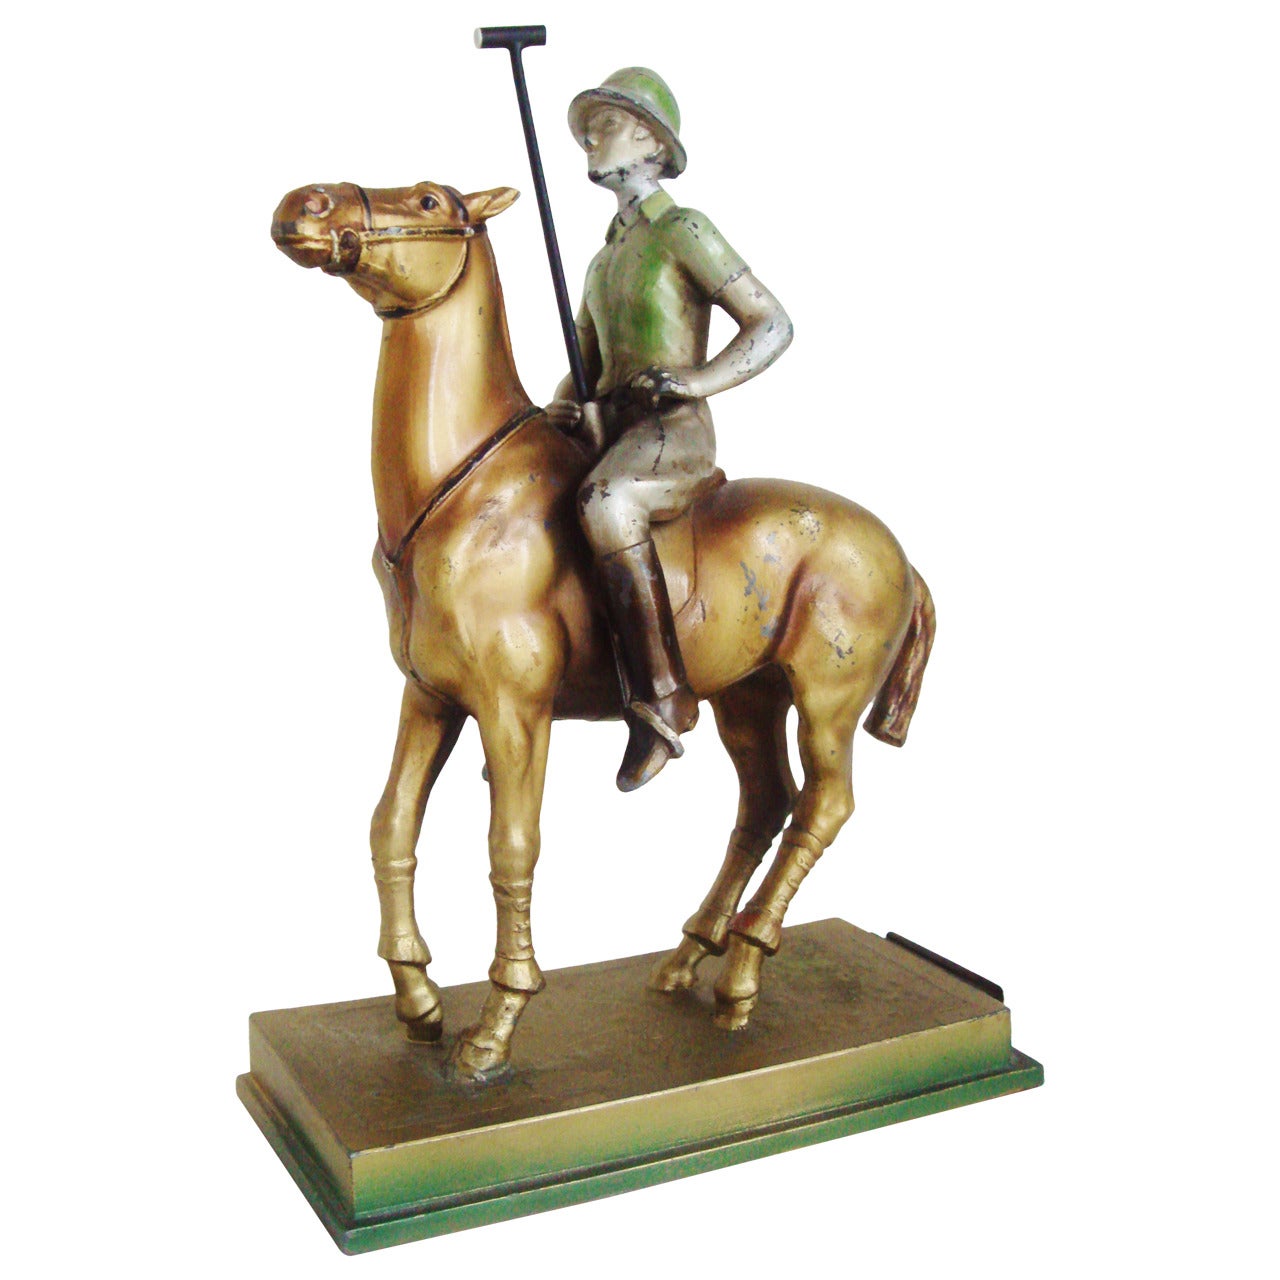 Gemello SET-Polo Player Pony & Mallet-Ideale Regalo da Uomo Polo Riders-ck512 